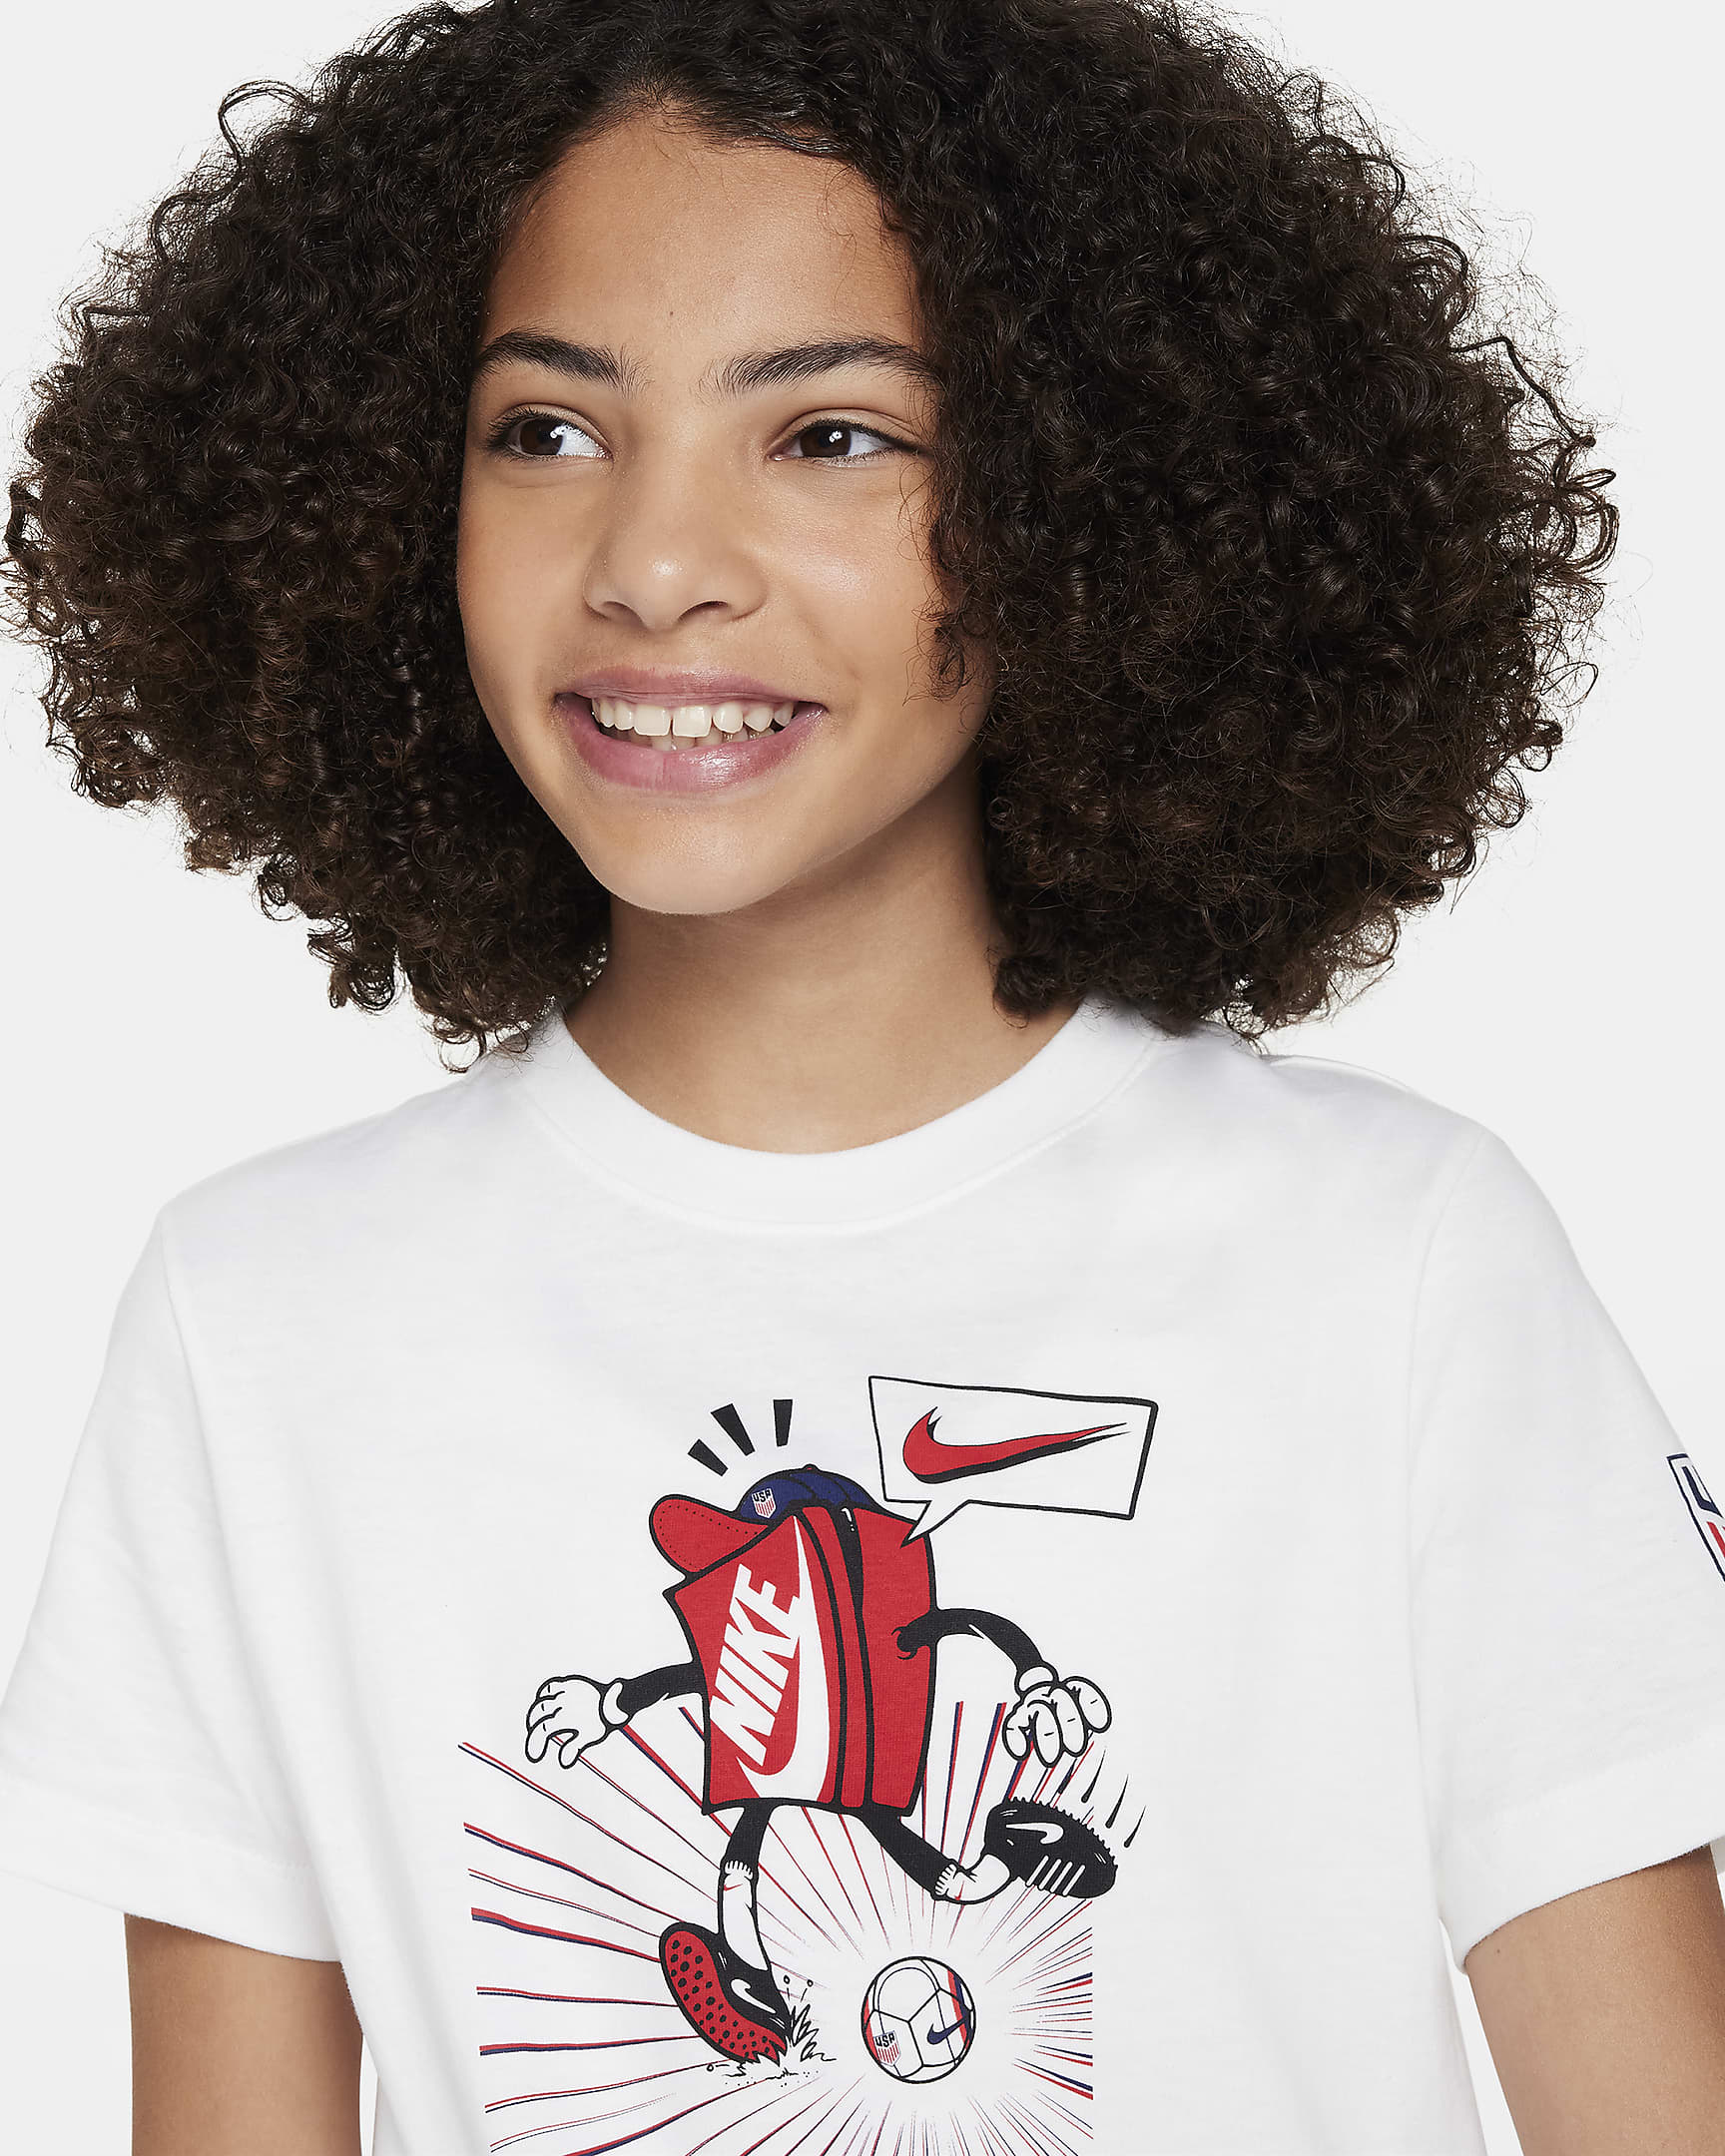 U.S. Big Kids' Nike Soccer T-Shirt. Nike.com